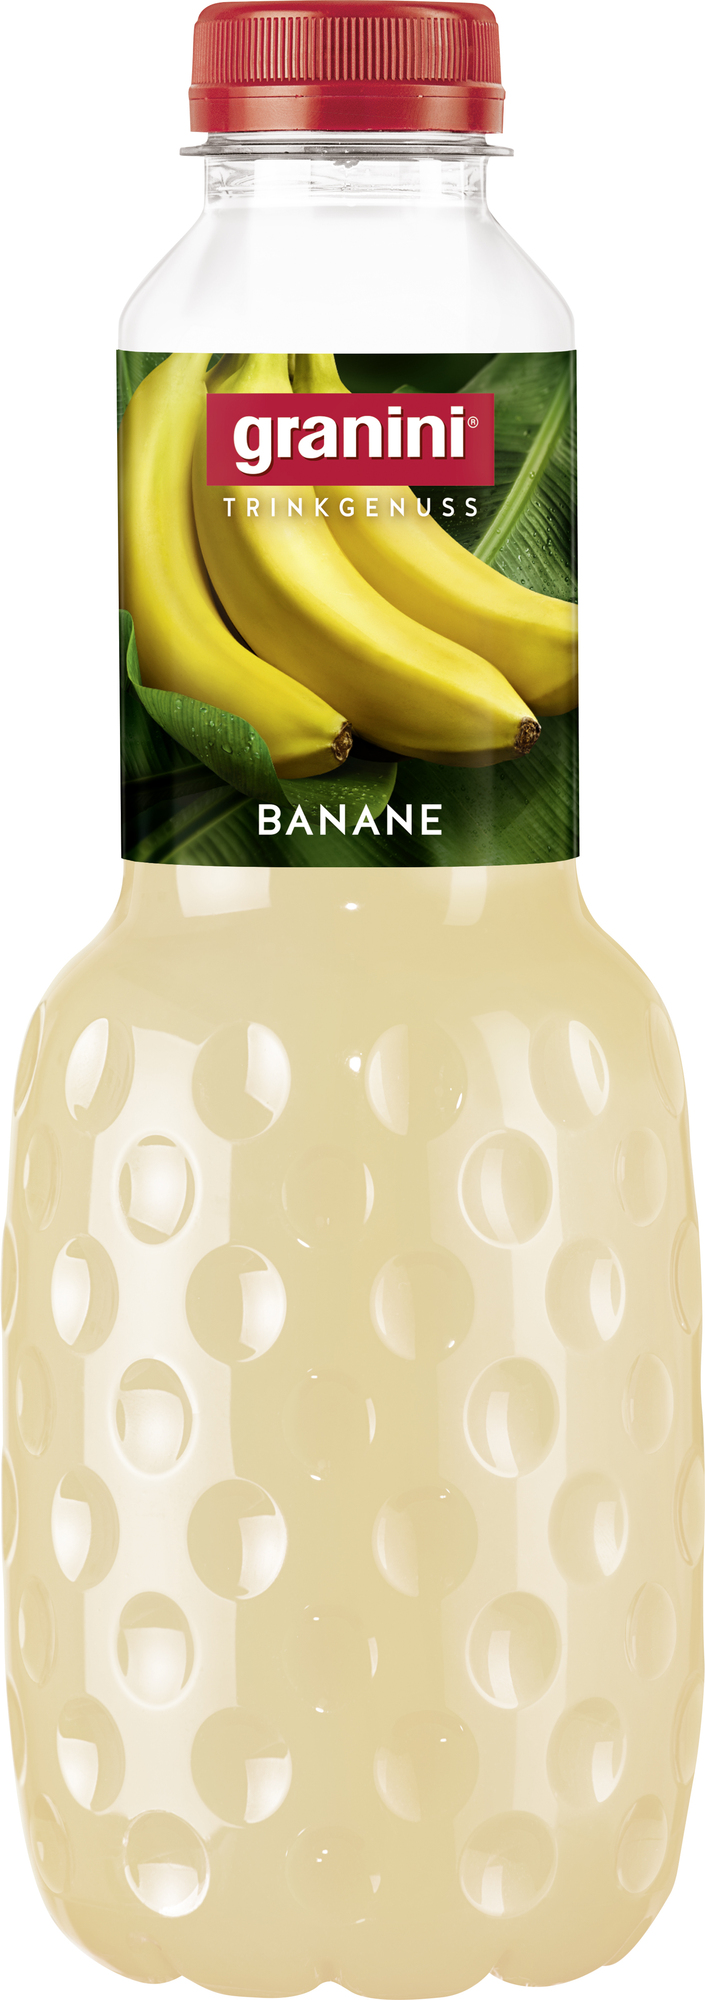 Trinkgenuss Banane 1000ml